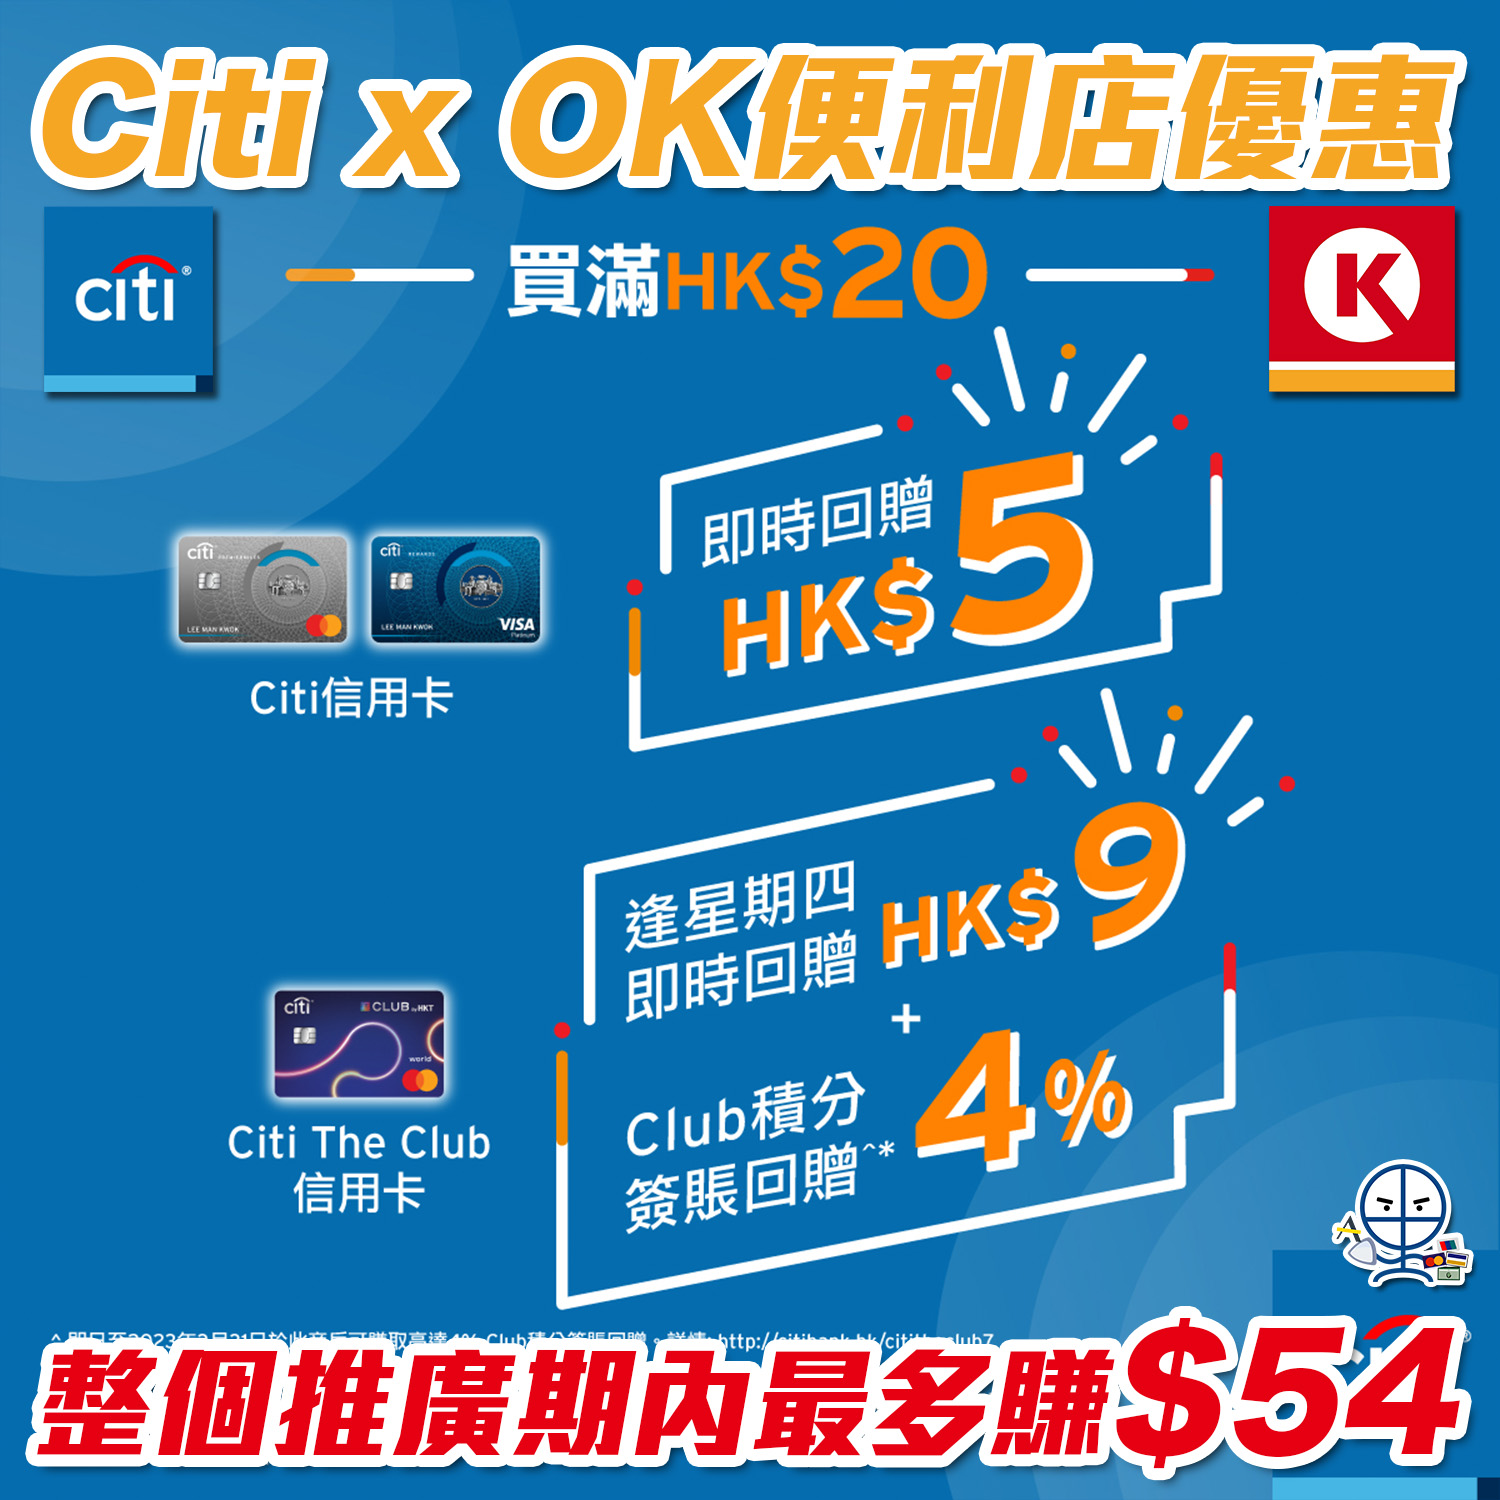 【Citi OK便利店優惠】 用Citi信用卡去Circle K買滿HK$20享高達HK$9即時回贈！